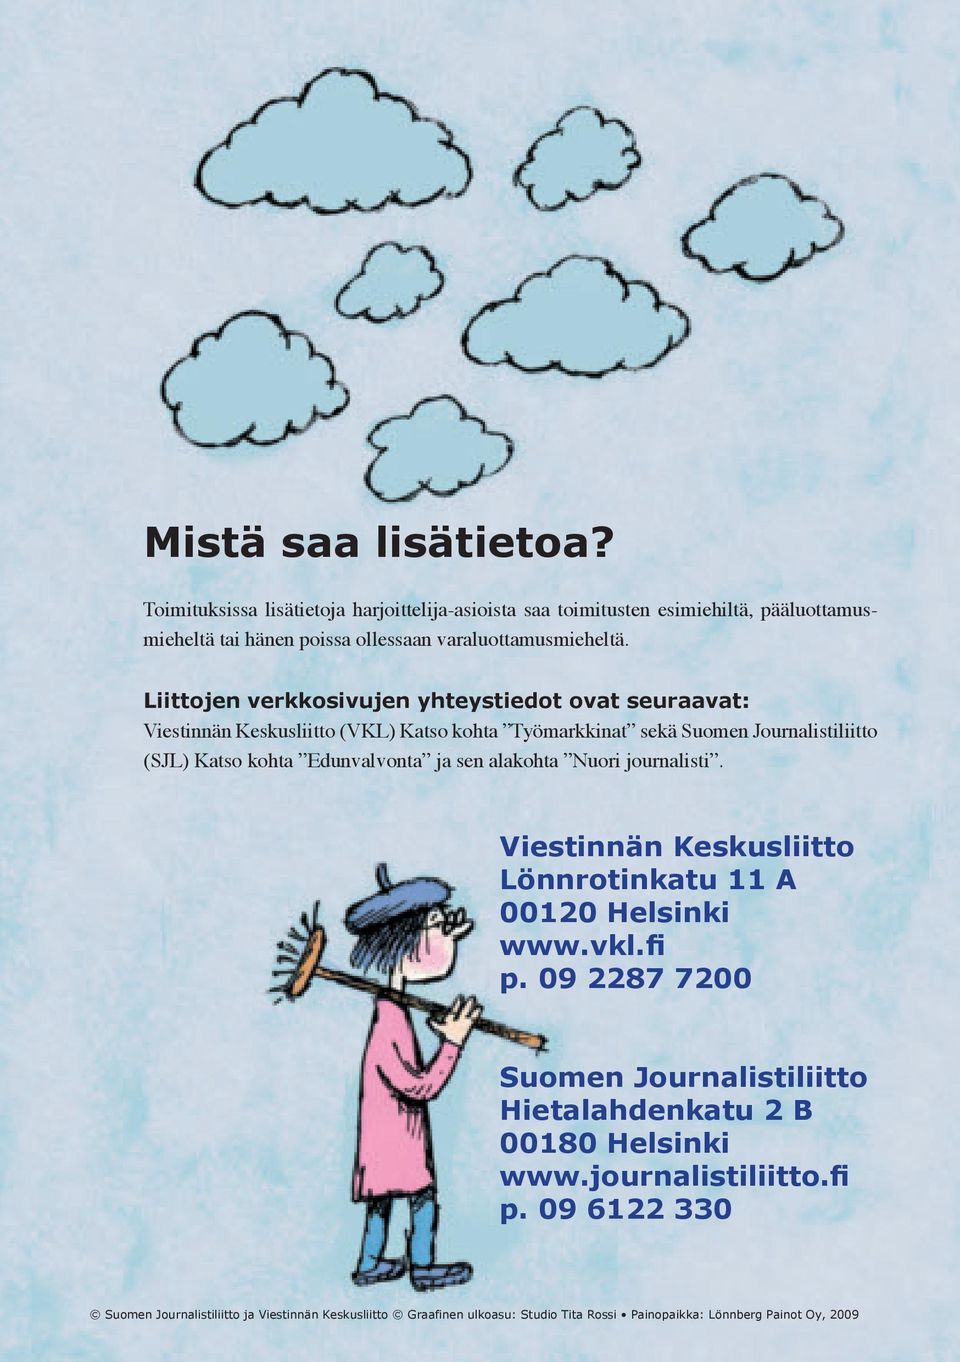 sen alakohta Nuori journalisti. Viestinnän Keskusliitto Lönnrotinkatu 11 A 00120 Helsinki www.vkl.fi p.